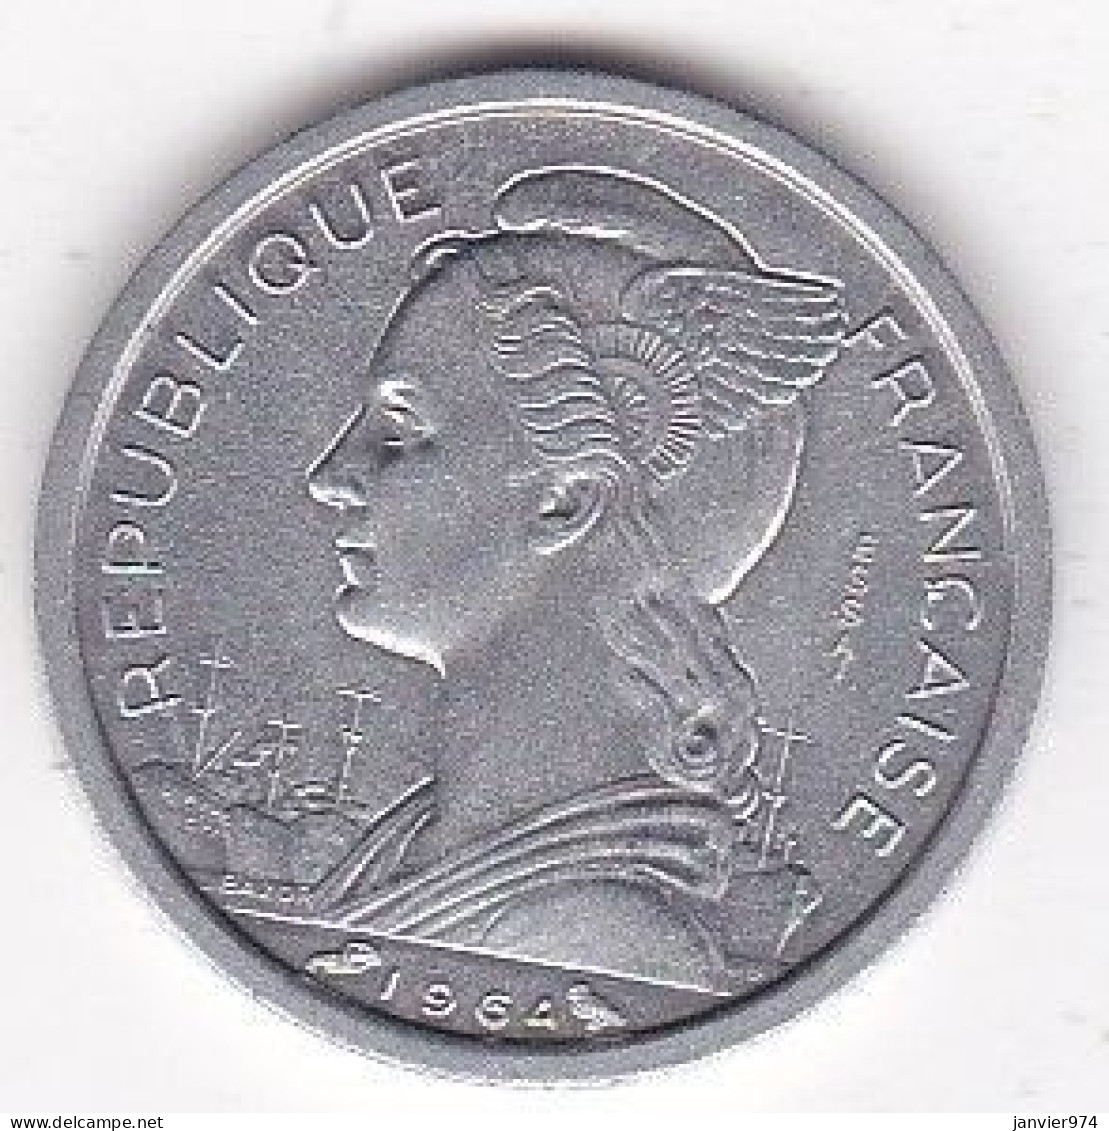 Archipel Des Comores , Republique Française 1 Franc 1964 ESSAI , En Aluminium LEC# 32, UNC - Comores